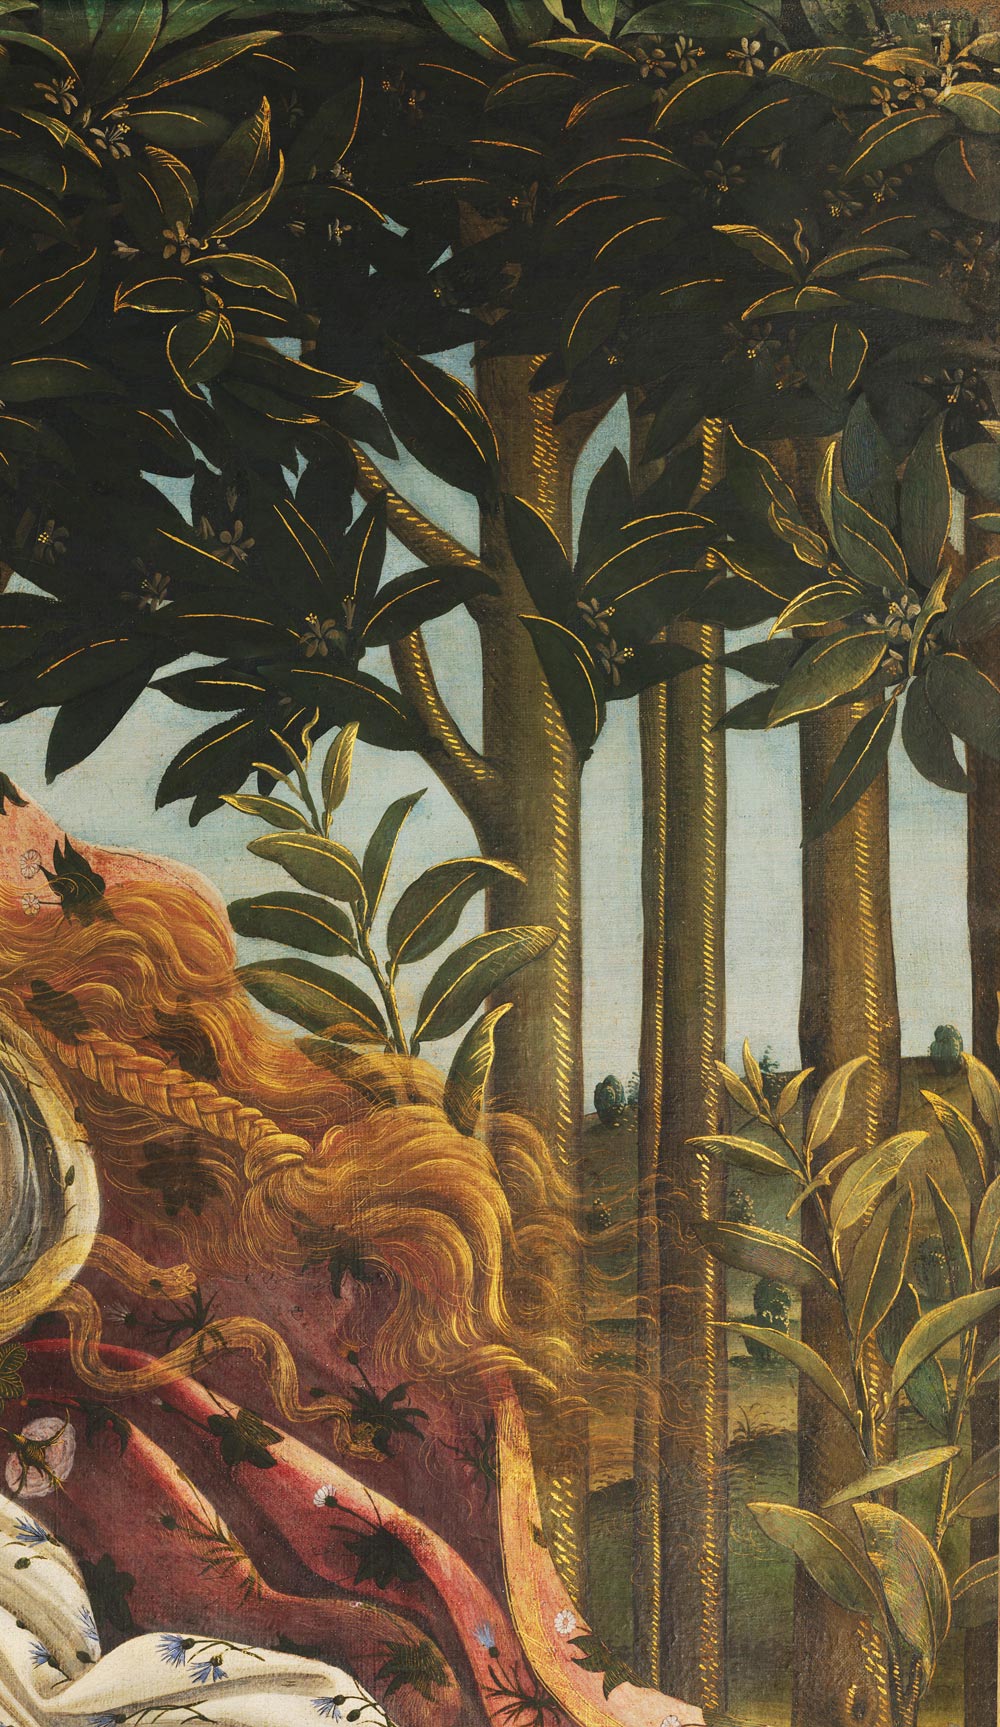 Sandro Botticelli, Birth of Venus, the orange